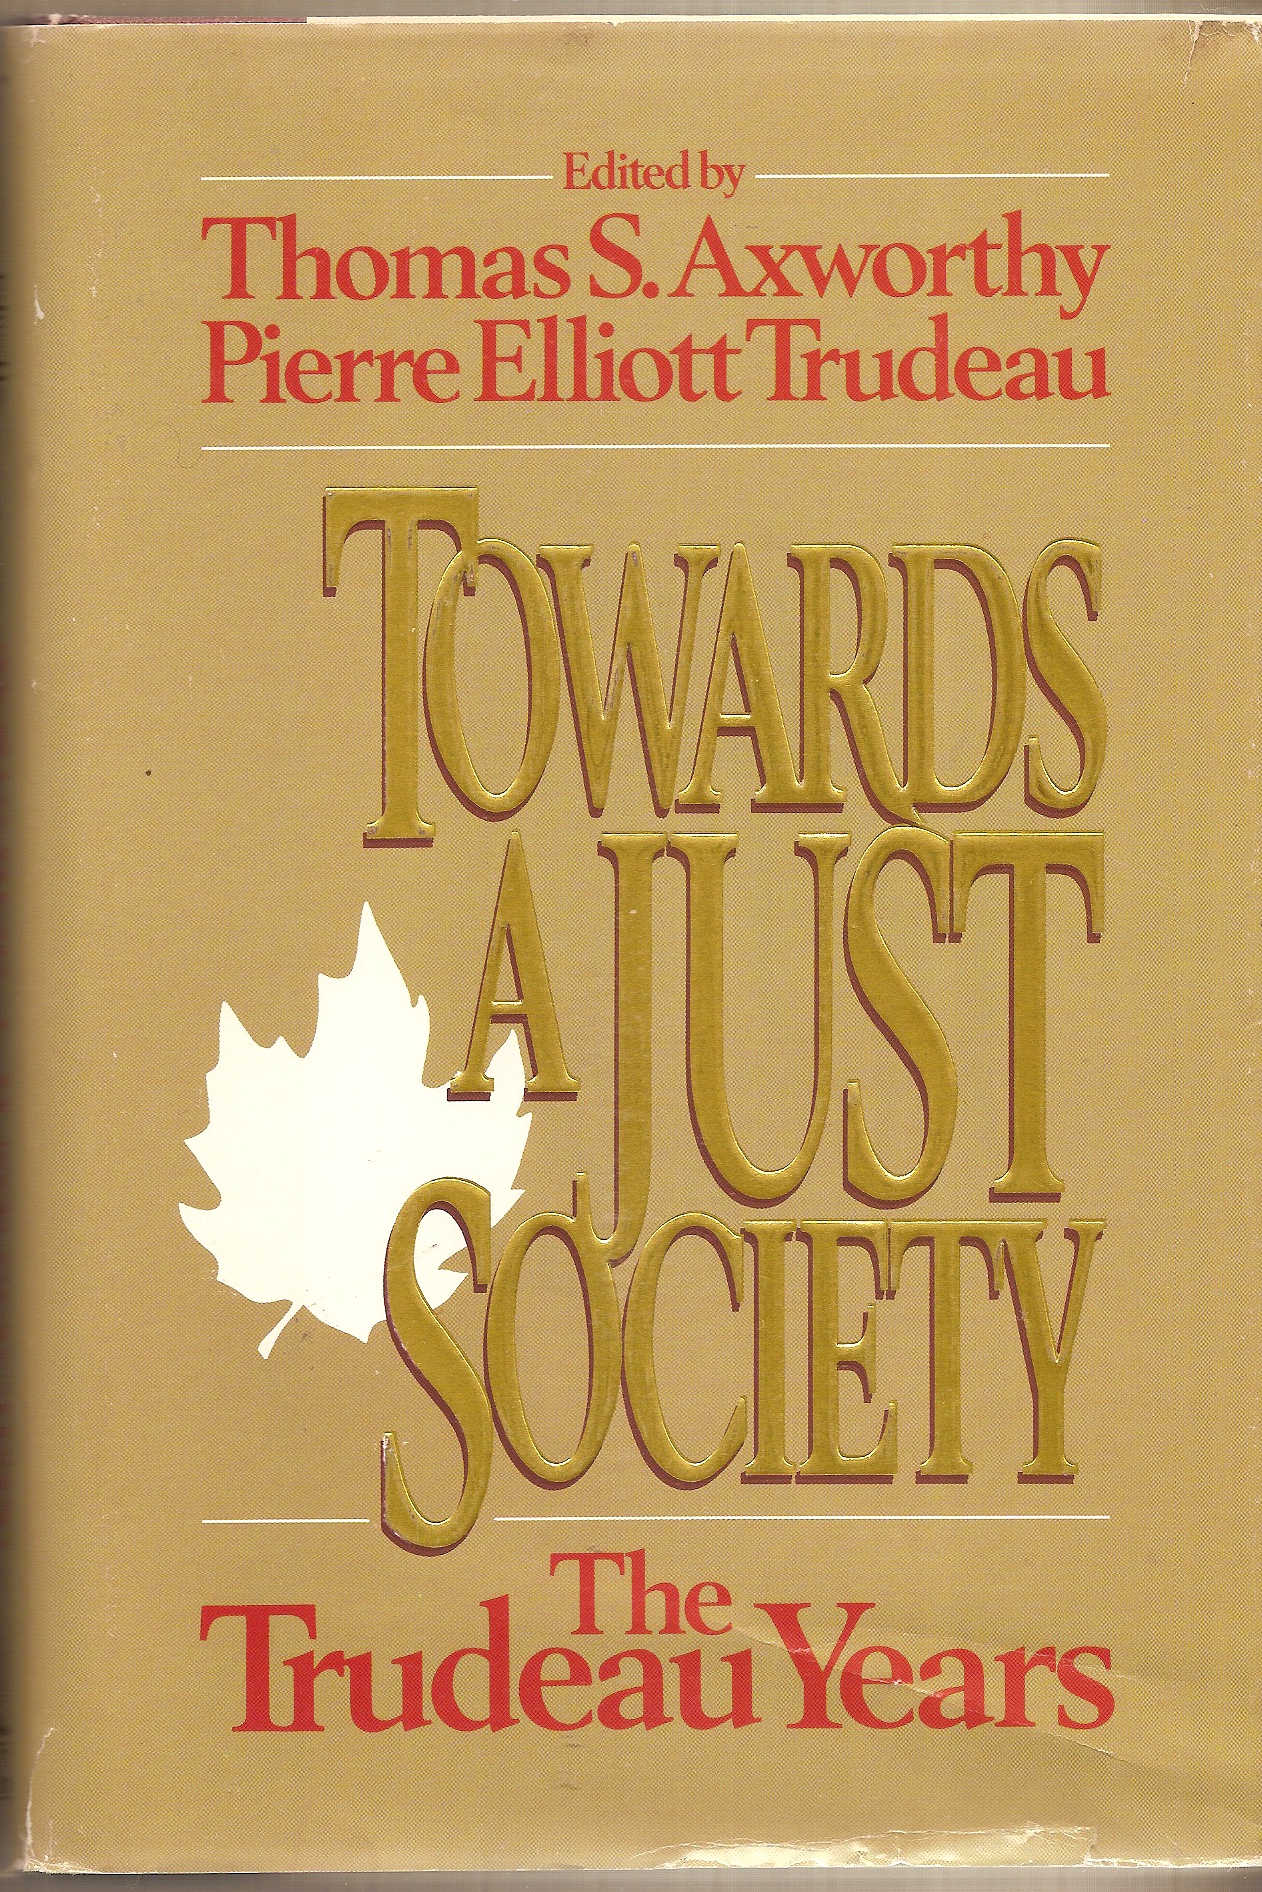 AXWORTHY THOMAS S. TRUDEAU, PIERRE ELLIOTT - Towards a Just Society the Trudeau Years